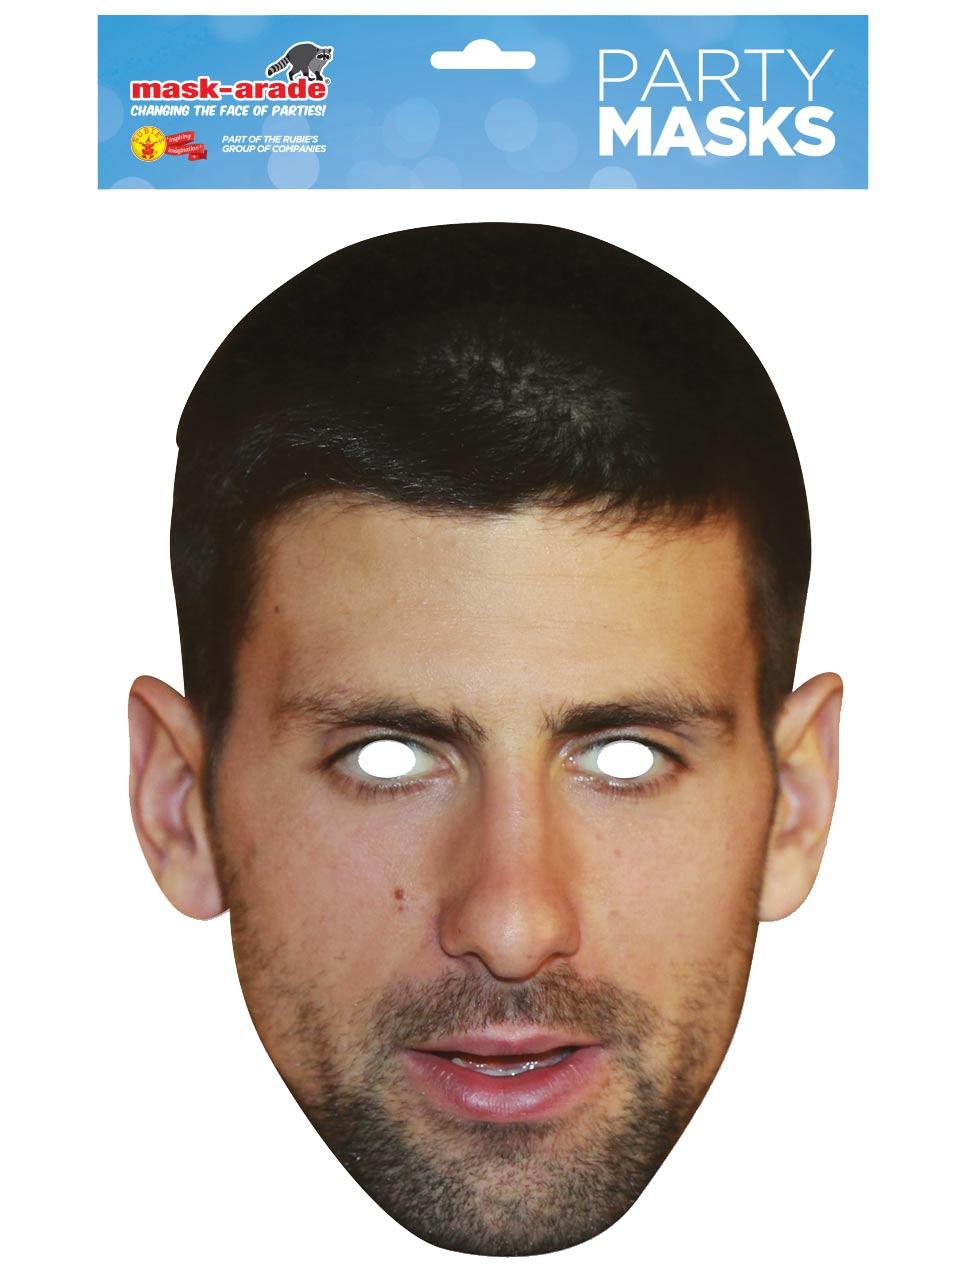 Novak Djokovic Celebrity Face Mask by Mask-erade NDJOK01 available here at Karnival Costumes online party shop